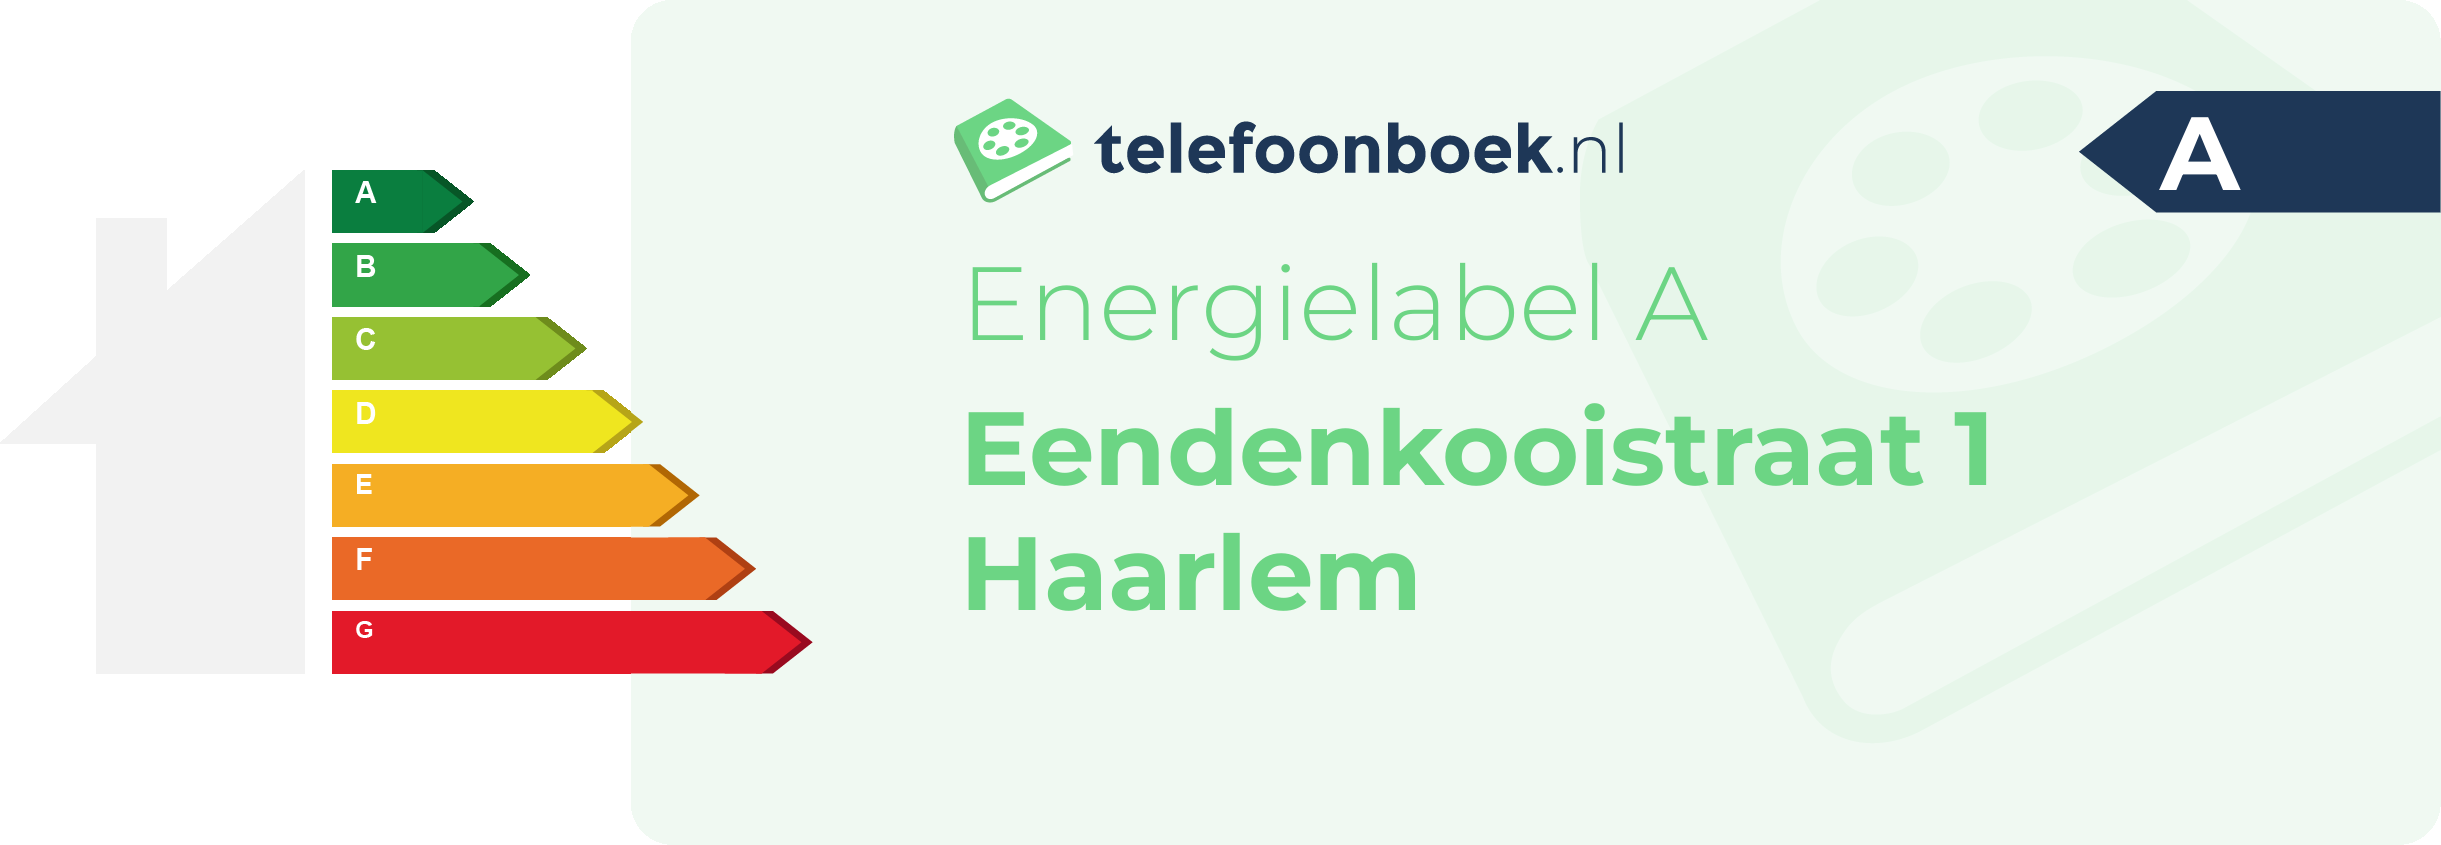 Energielabel Eendenkooistraat 1 Haarlem